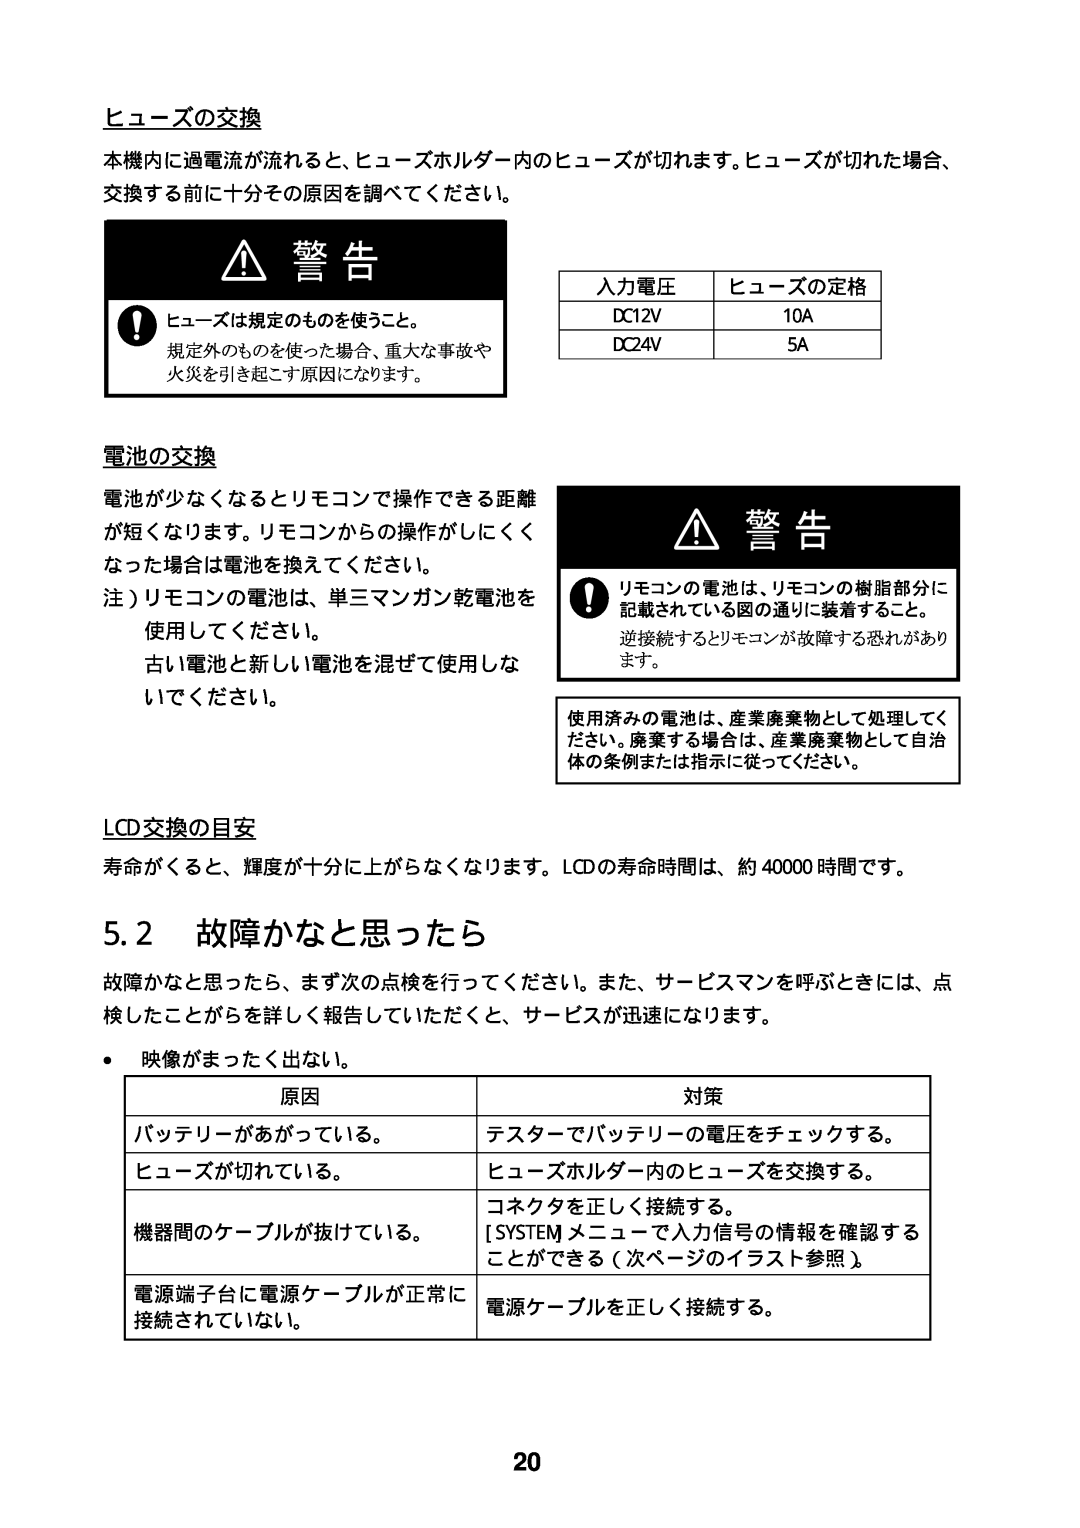 Furuno MU-170C manual 5.2 故障かなと思ったら, ヒューズの交換, 電池の交換, Lcd 交換の目安 